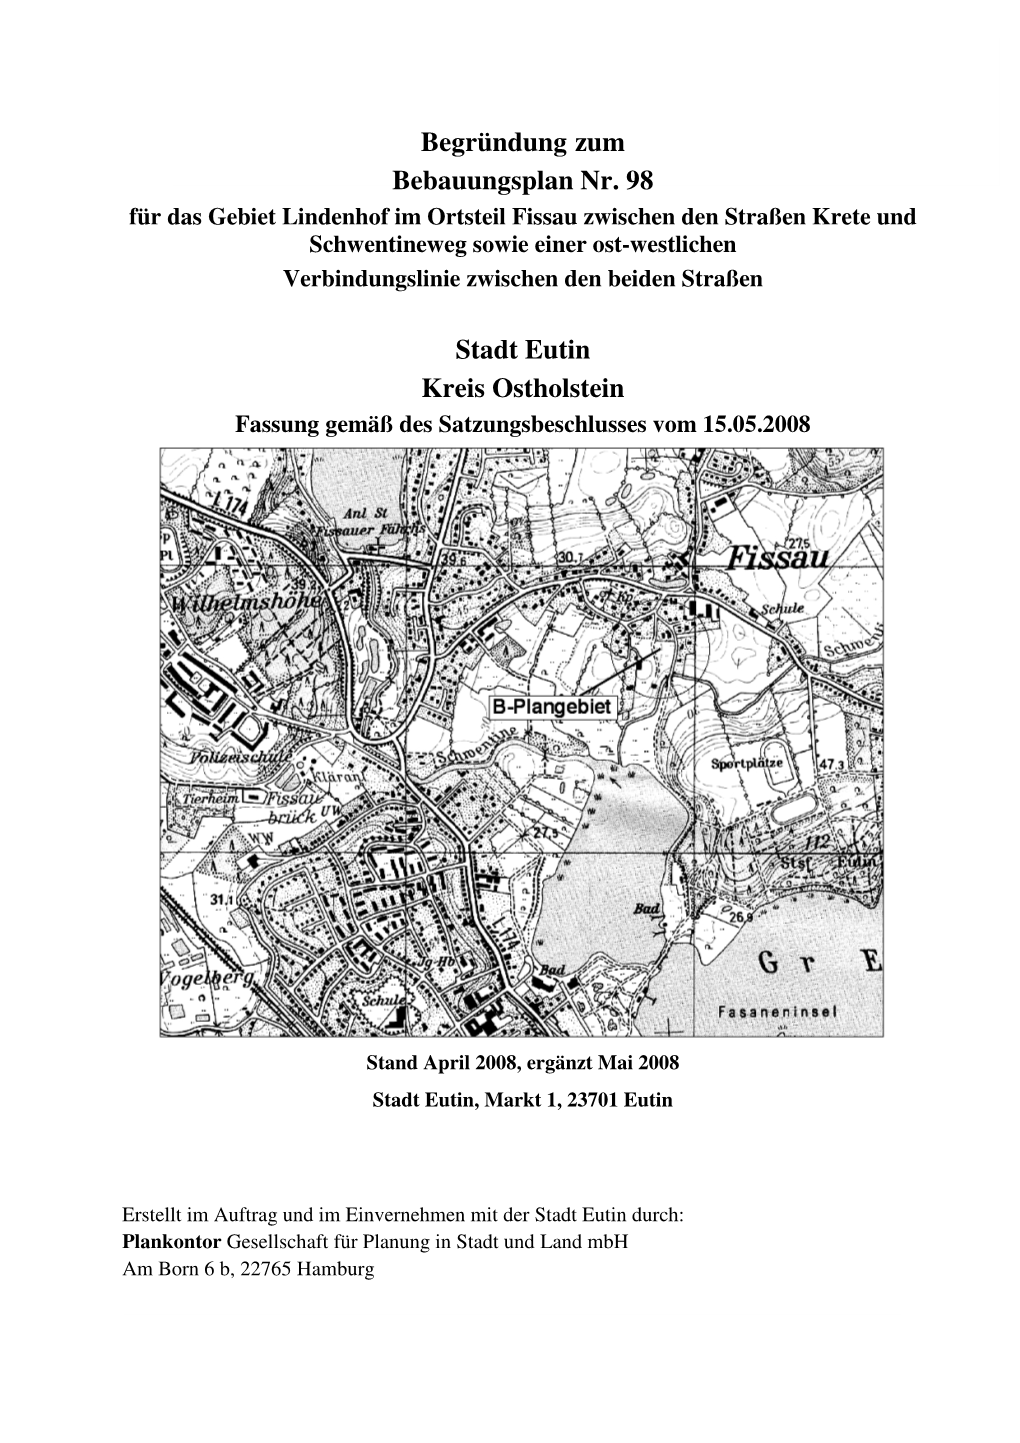 Begründung Zum Bebauungsplan Nr. 98 Stadt Eutin Kreis Ostholstein